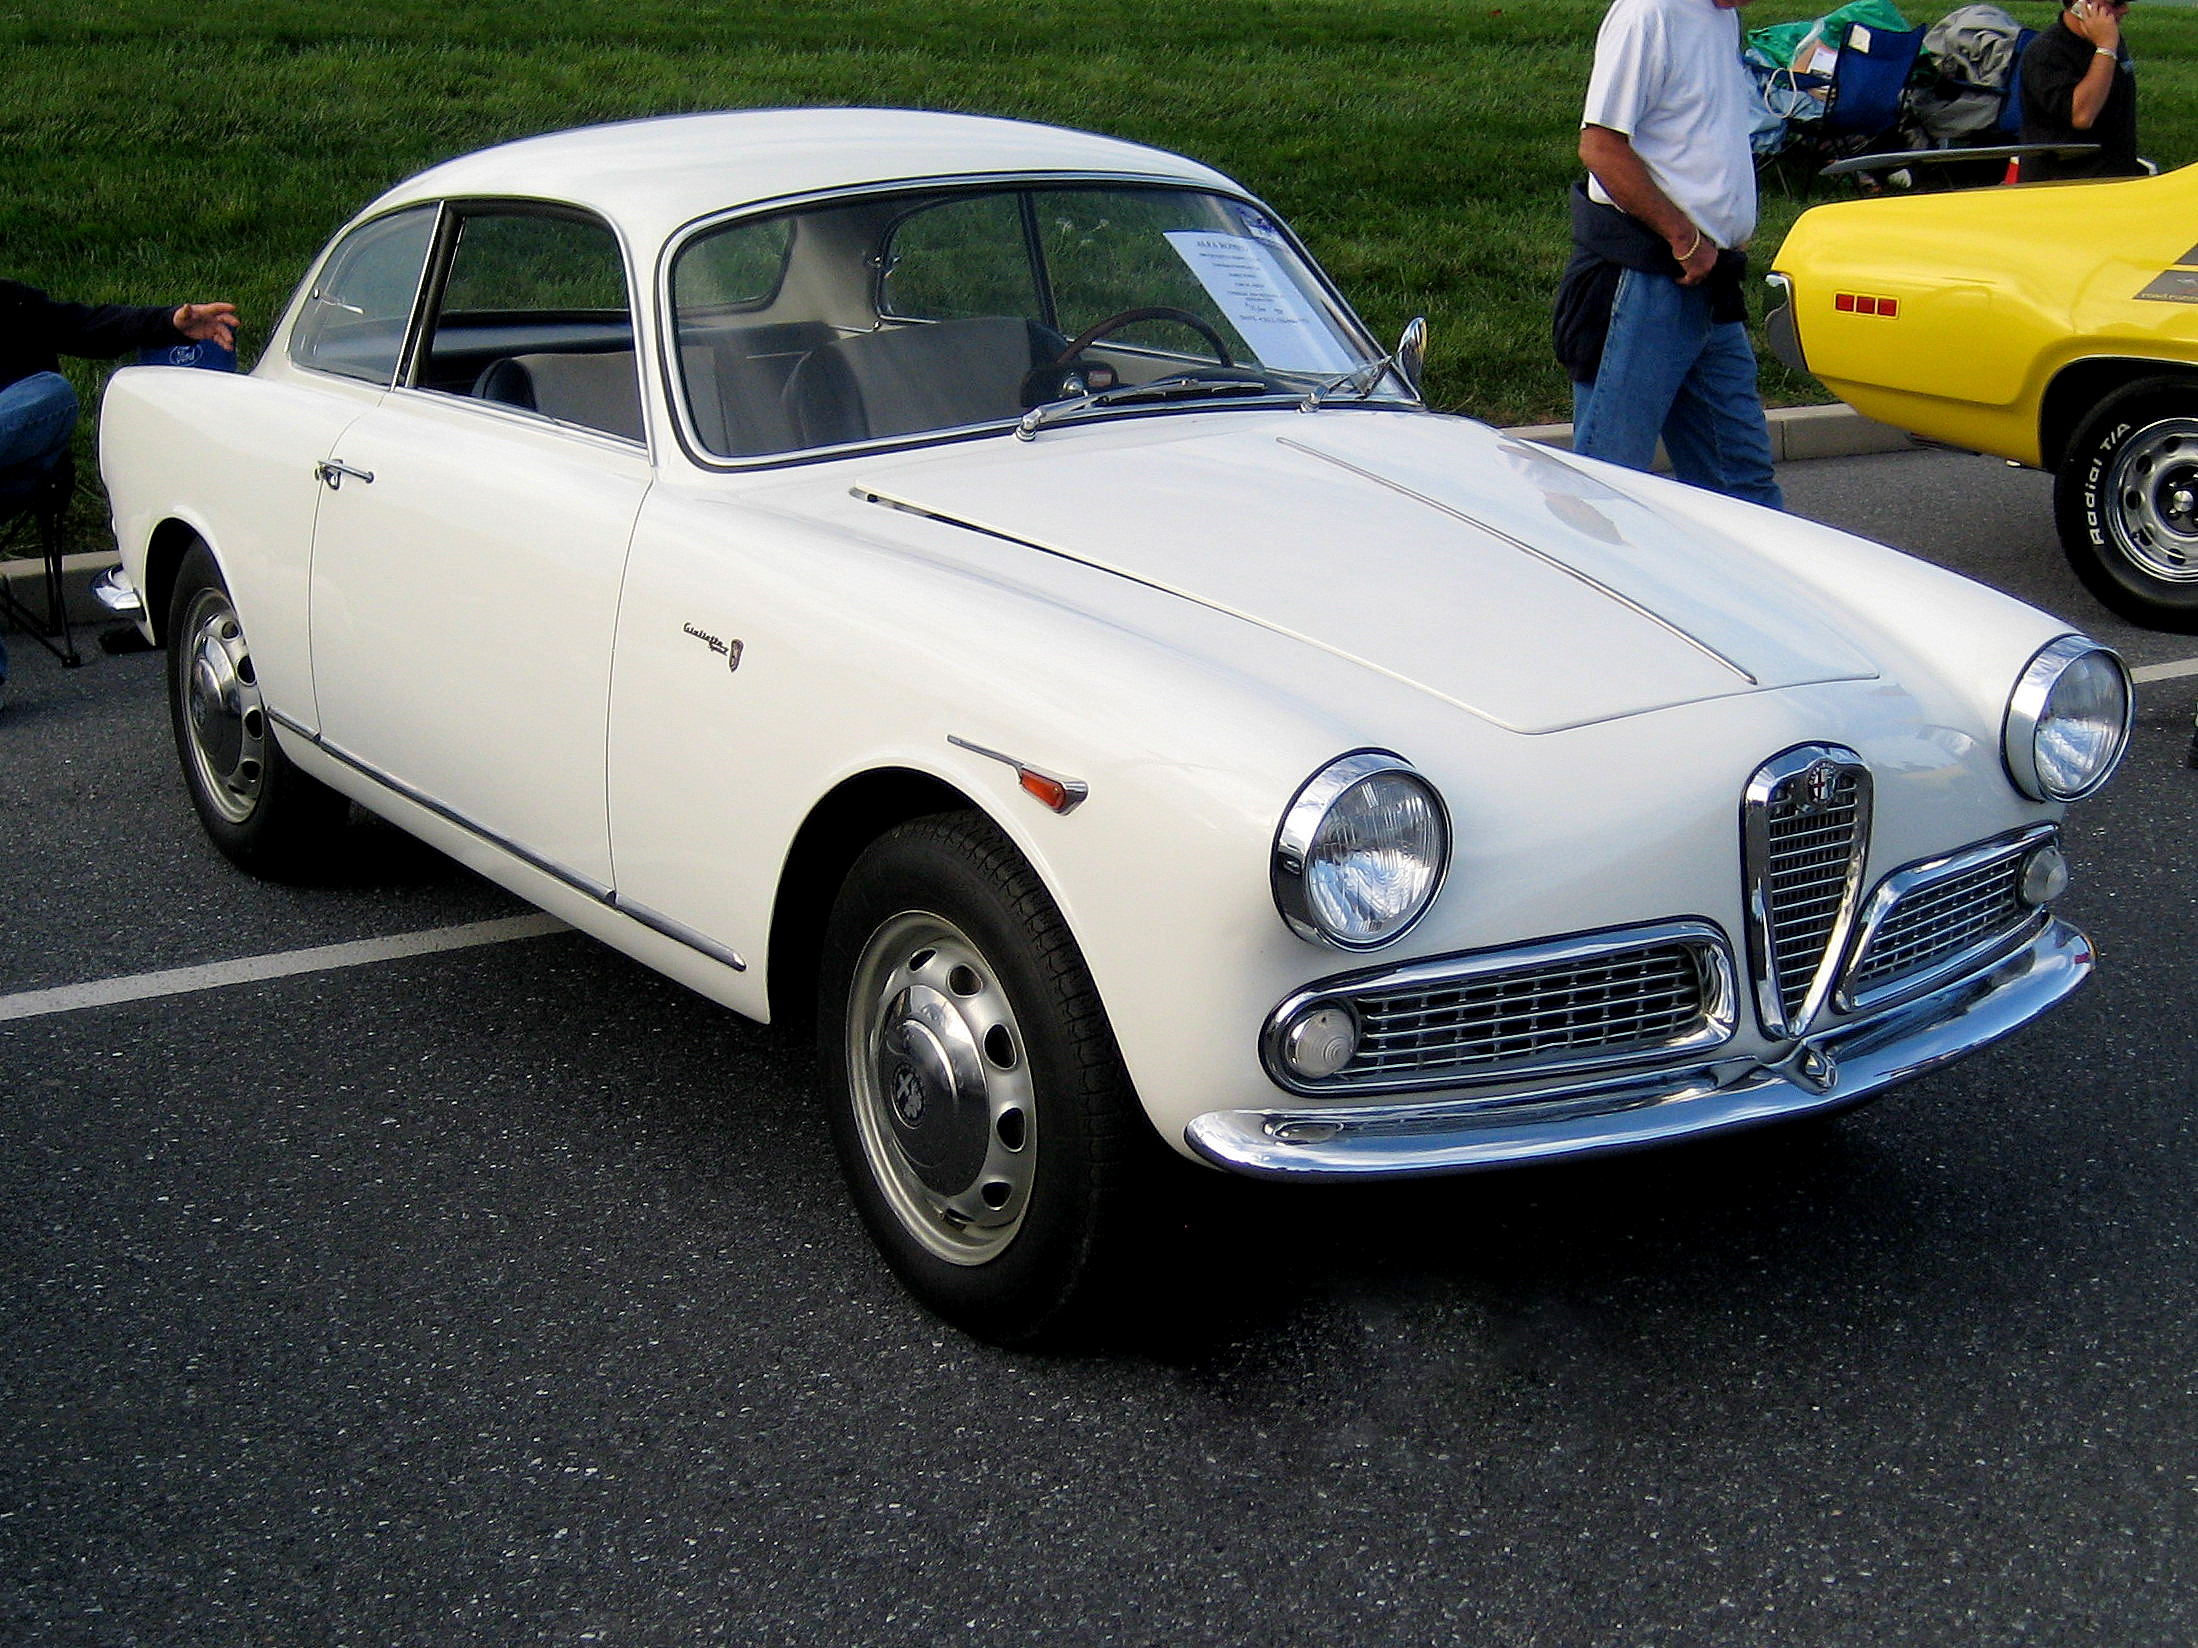 1950s, Alfa Romeo, classic cars